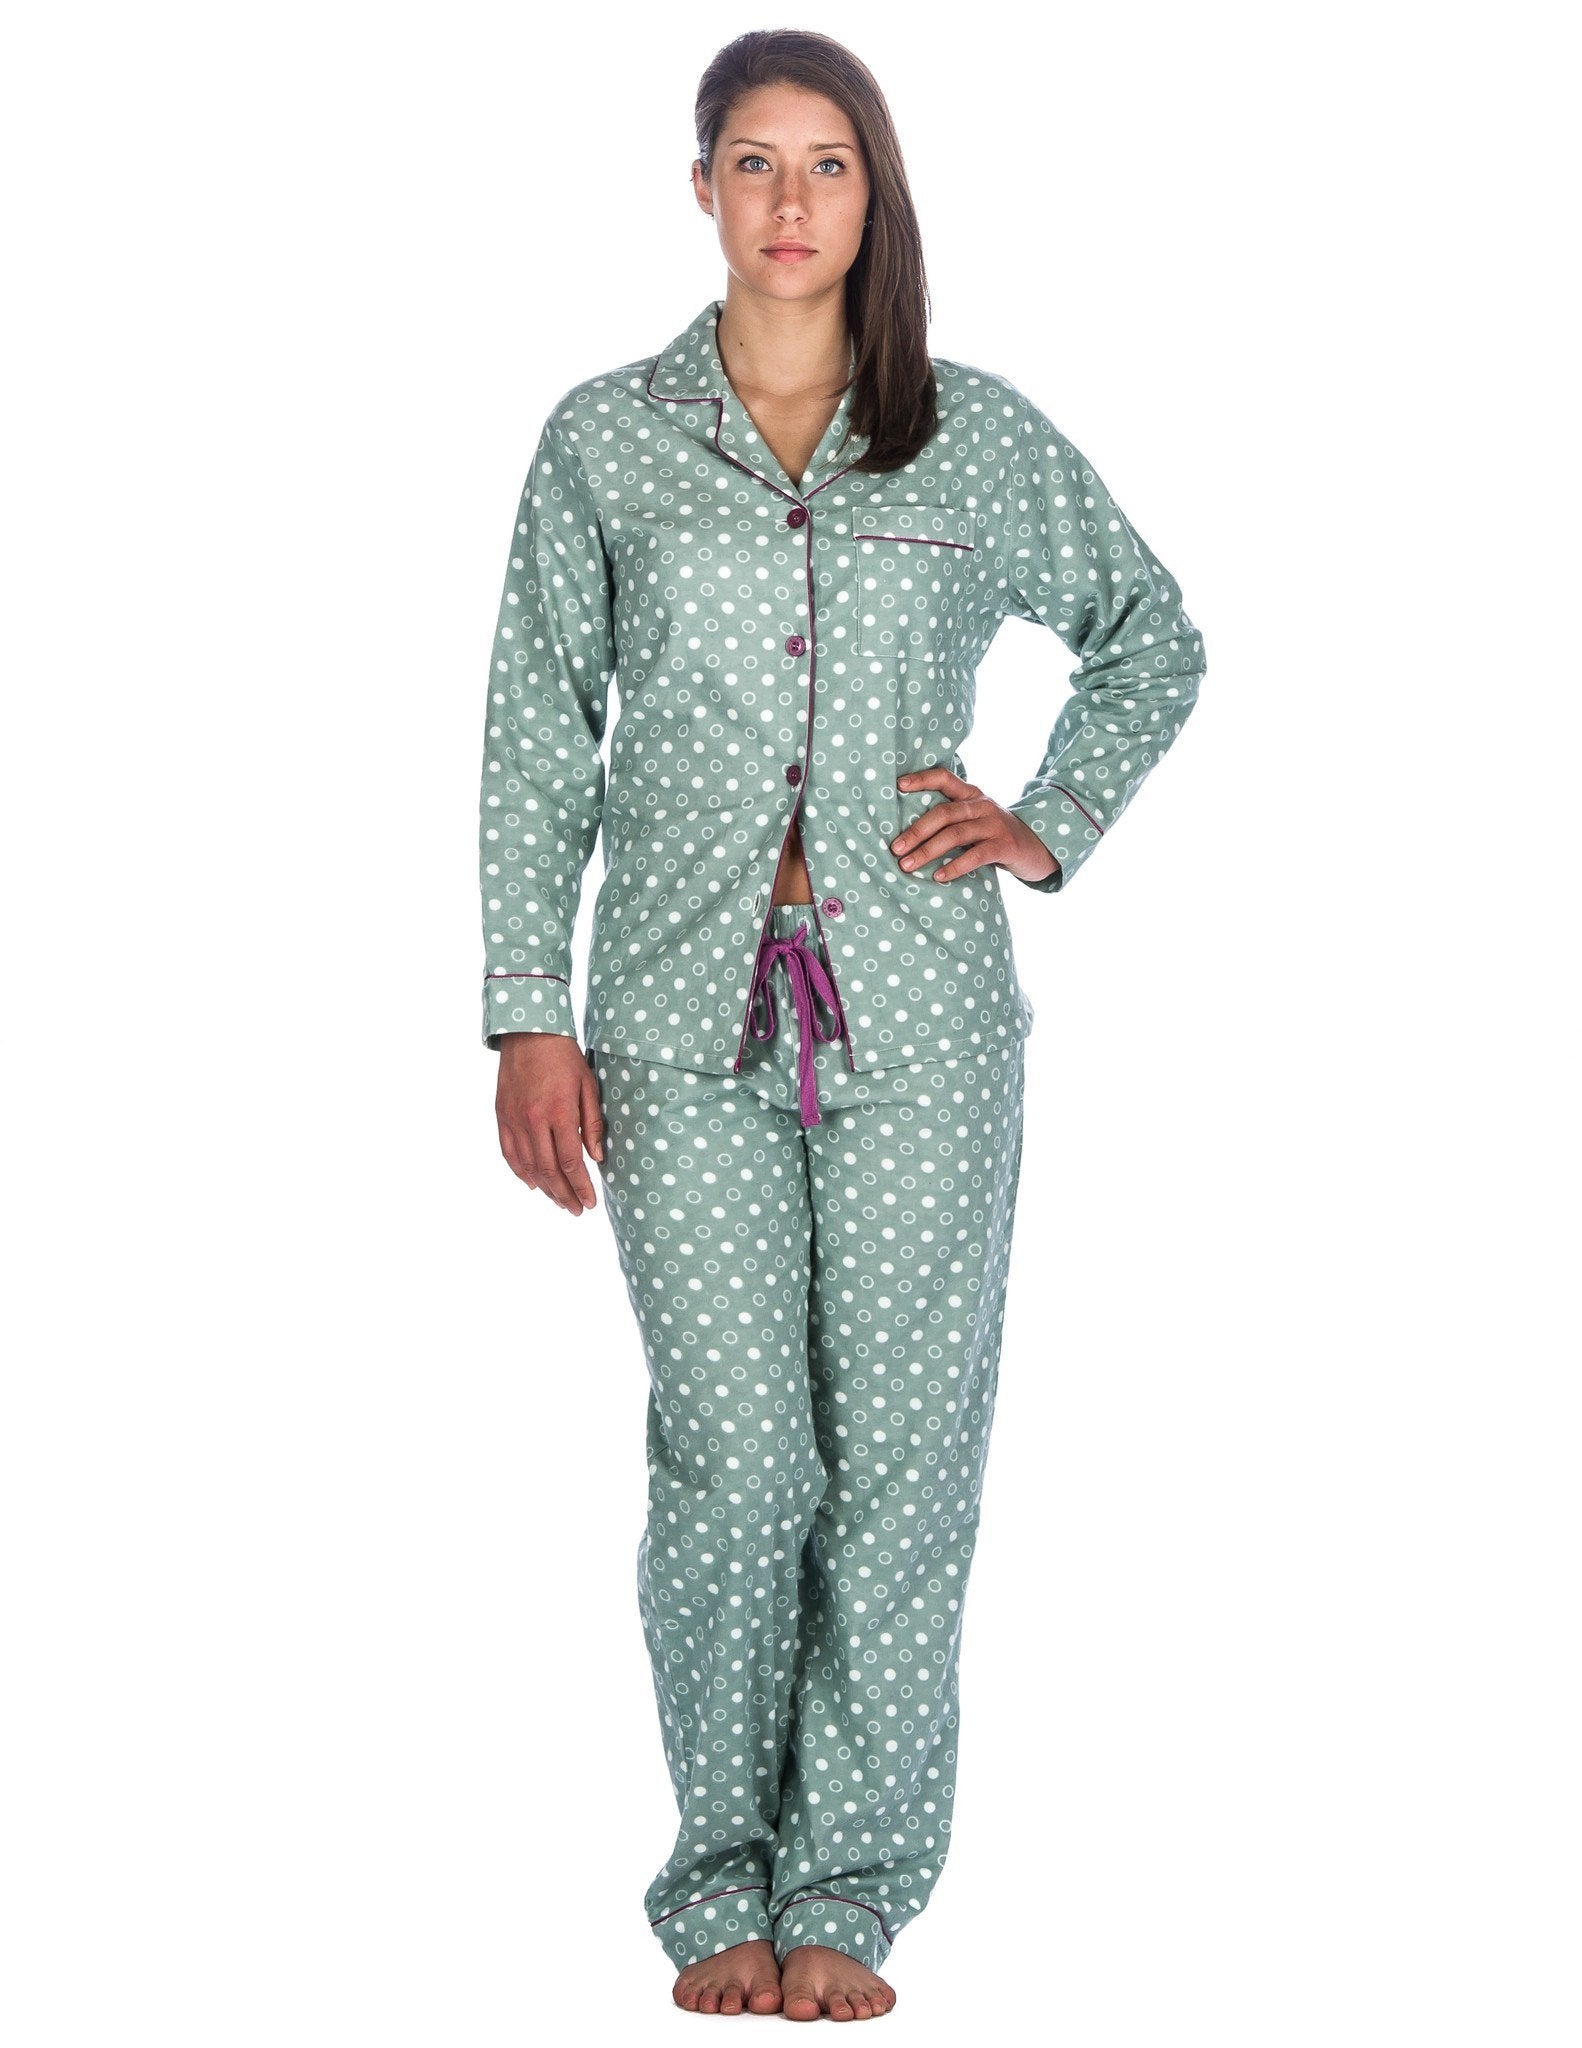 Realxed Fit Womens 100% Cotton Flannel Pajama Sleepwear Set - Polka Circles Green